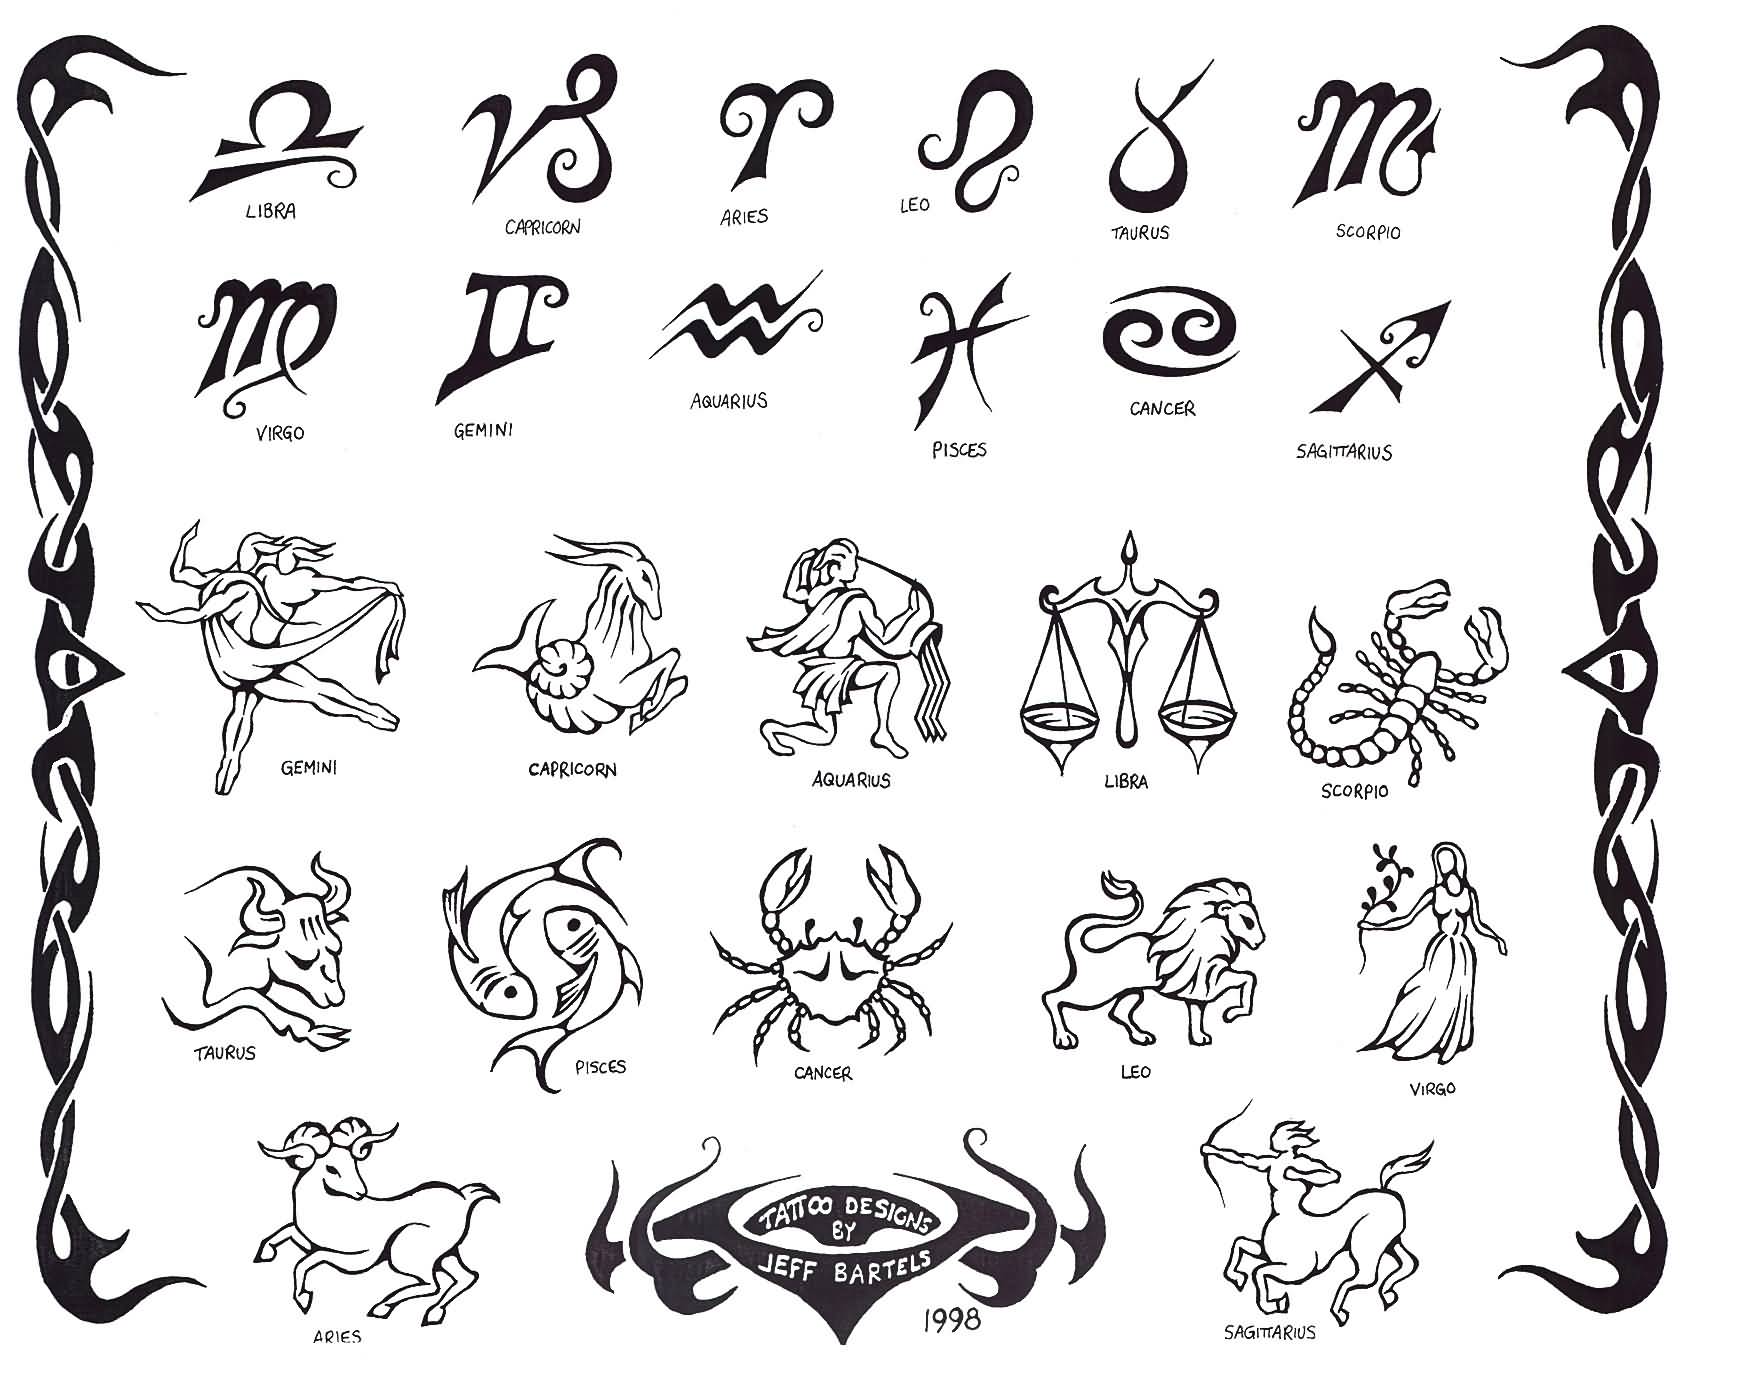 1. Gemini Zodiac Sign Tattoo Ideas - wide 2